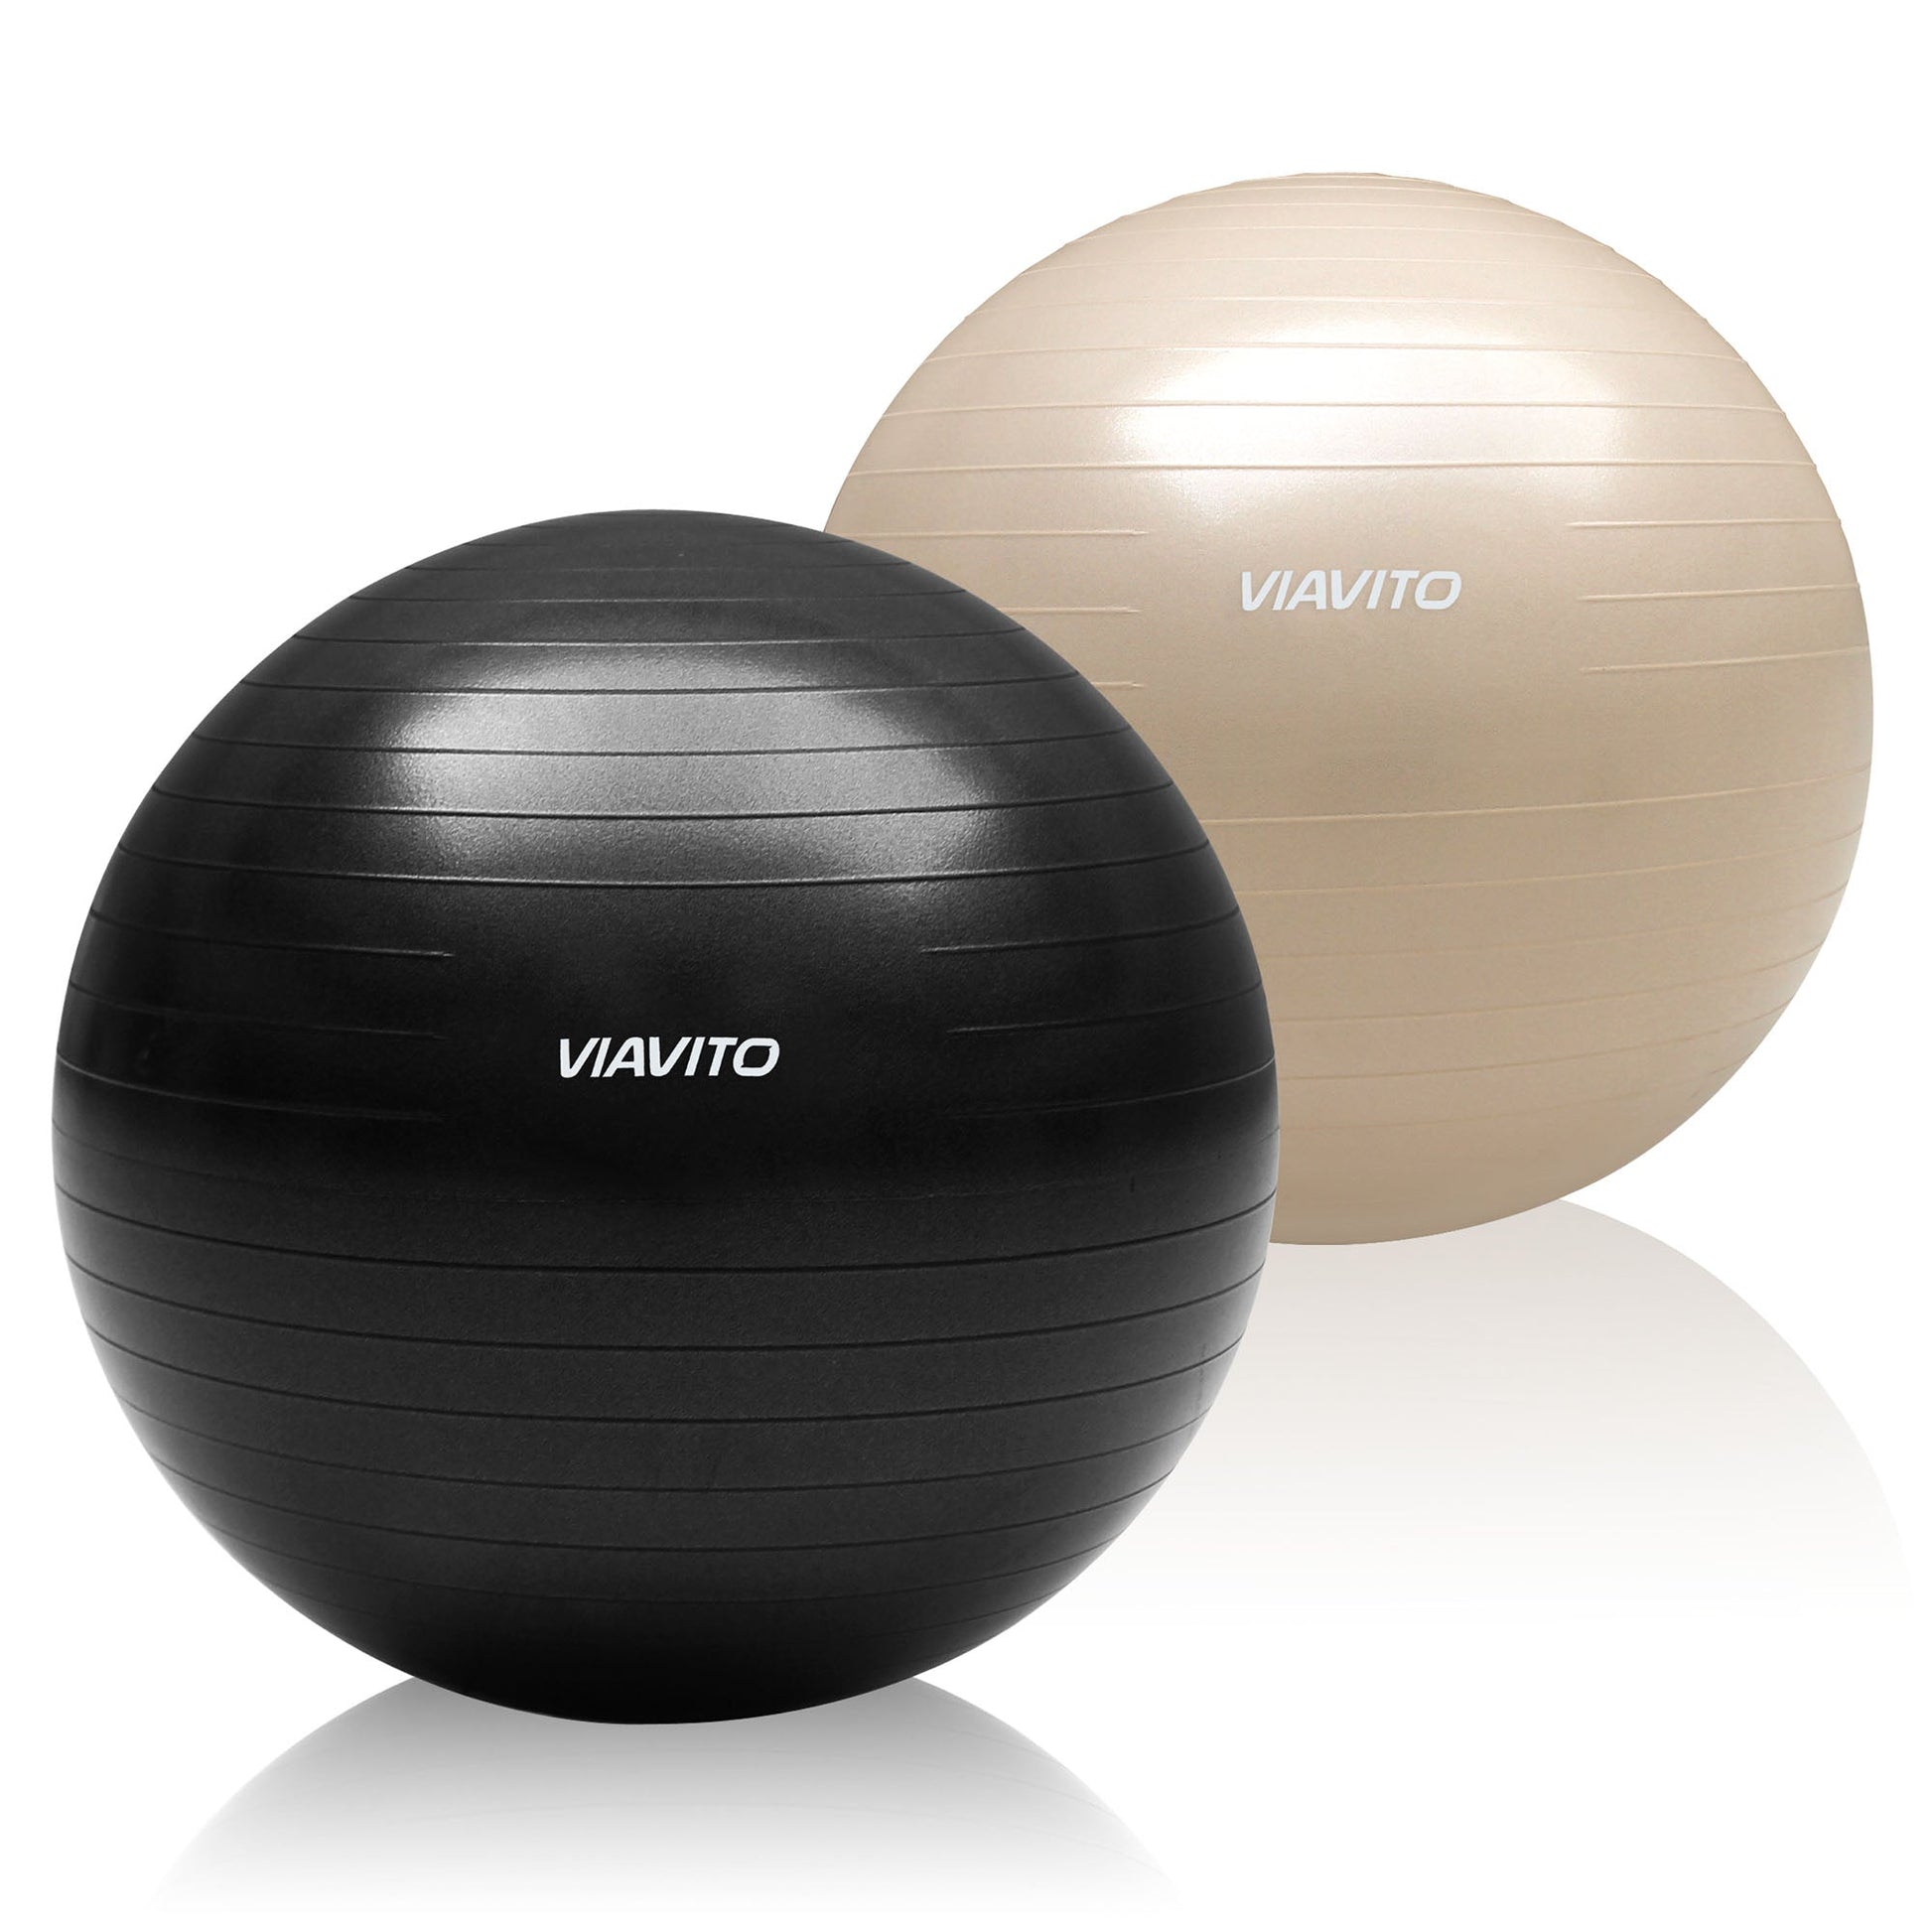 |Viavito 500kg Studio Antiburst 75cm Gym Ball - Main|